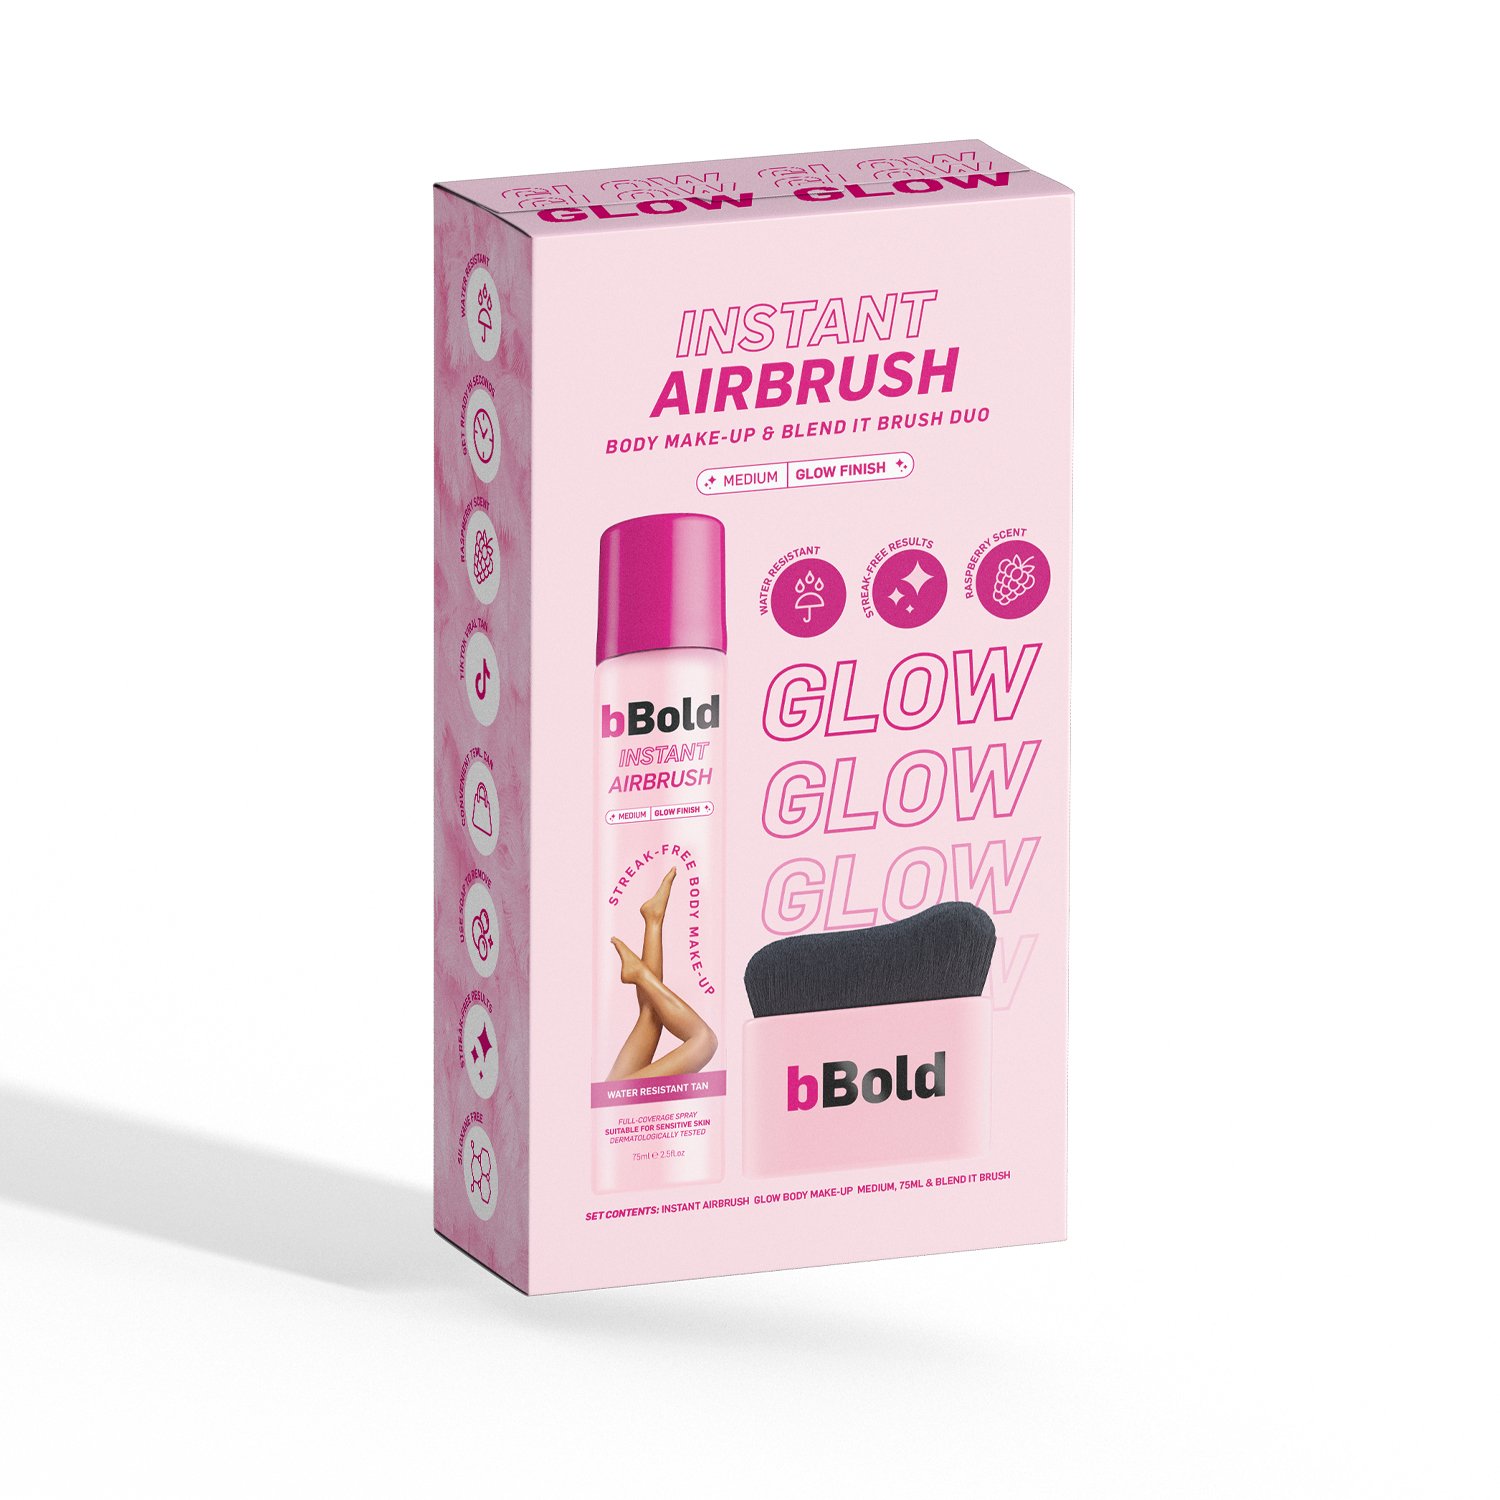 bBold Instant Airbrush Glow Medium Dark 2pc Box Kit